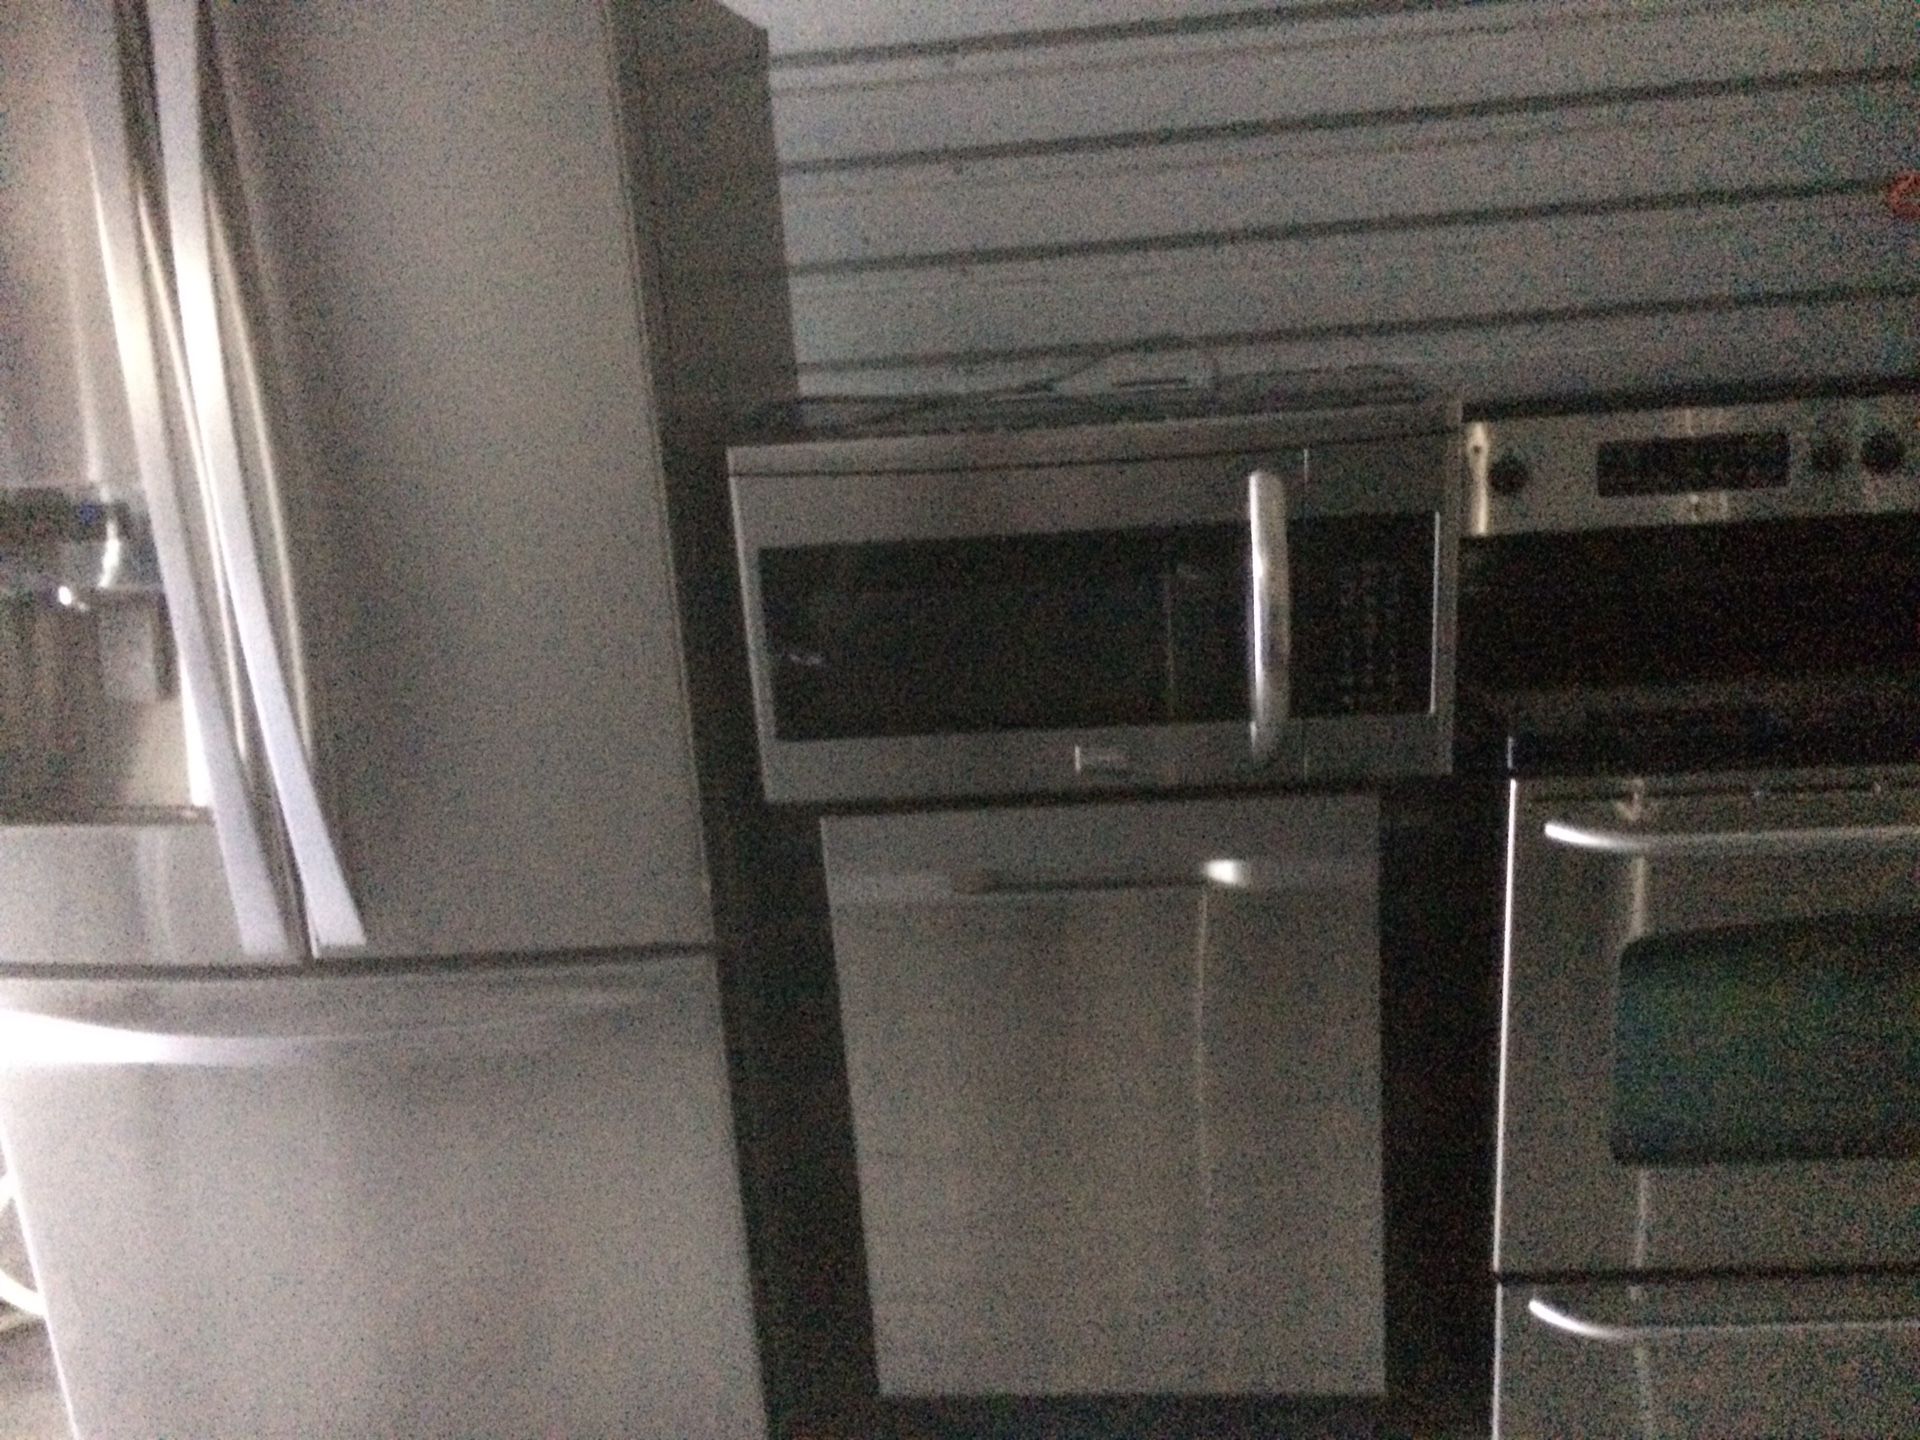 Stainless steel Fridge stove microwave dishwasher